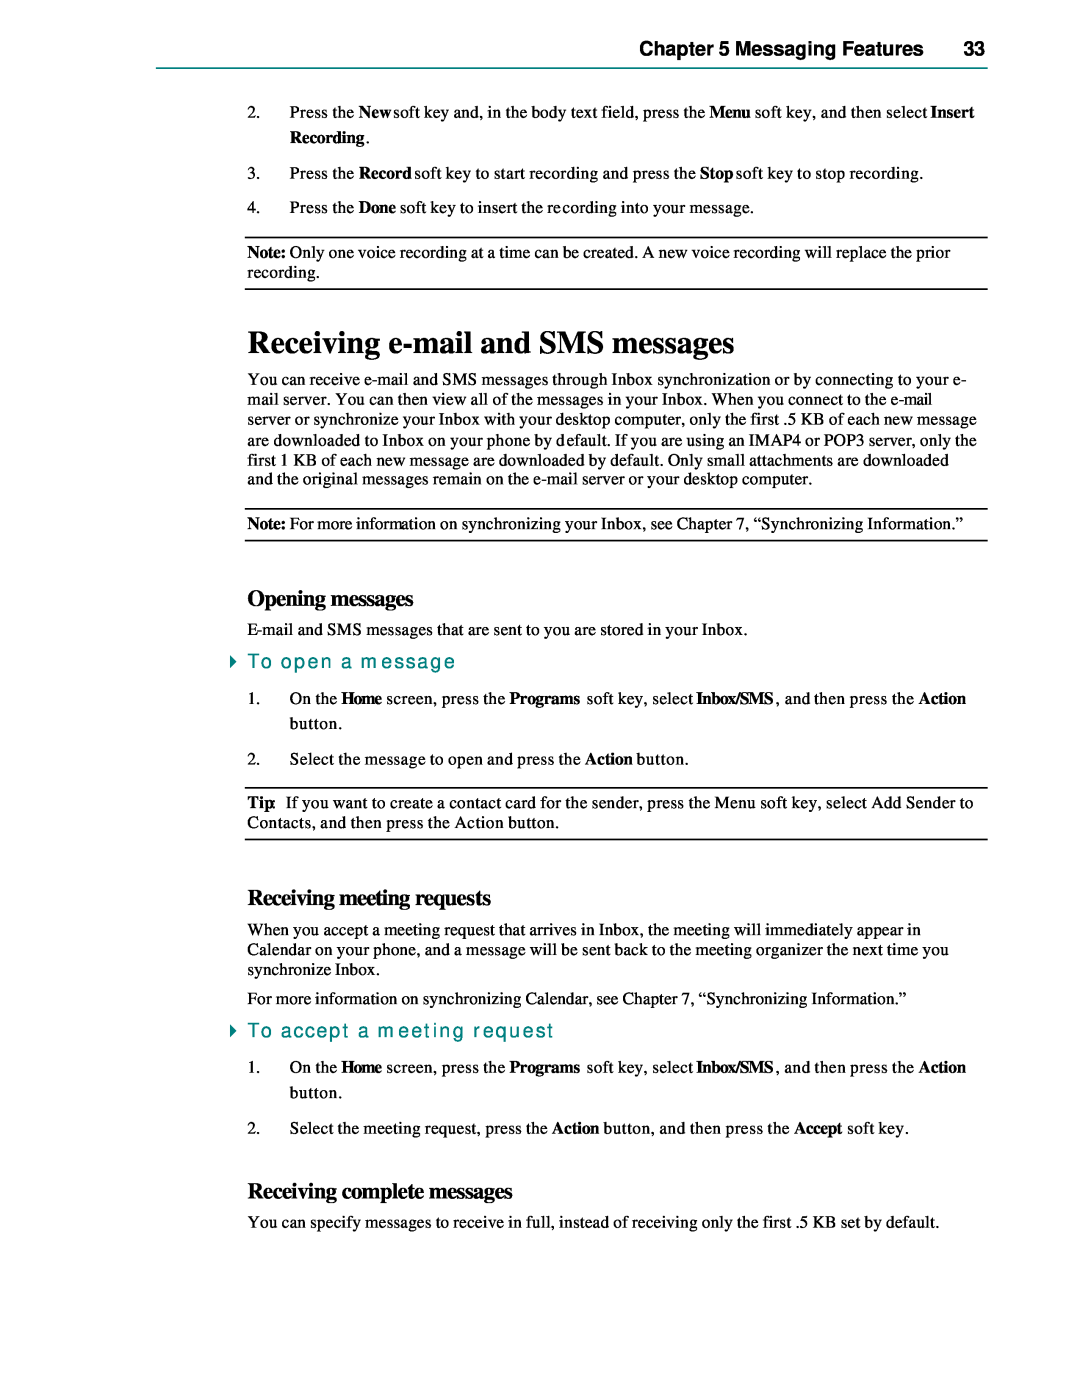 Microsoft Smartphone 2002 manual Receiving e-mail and SMS messages, Opening messages, Receiving meeting requests 